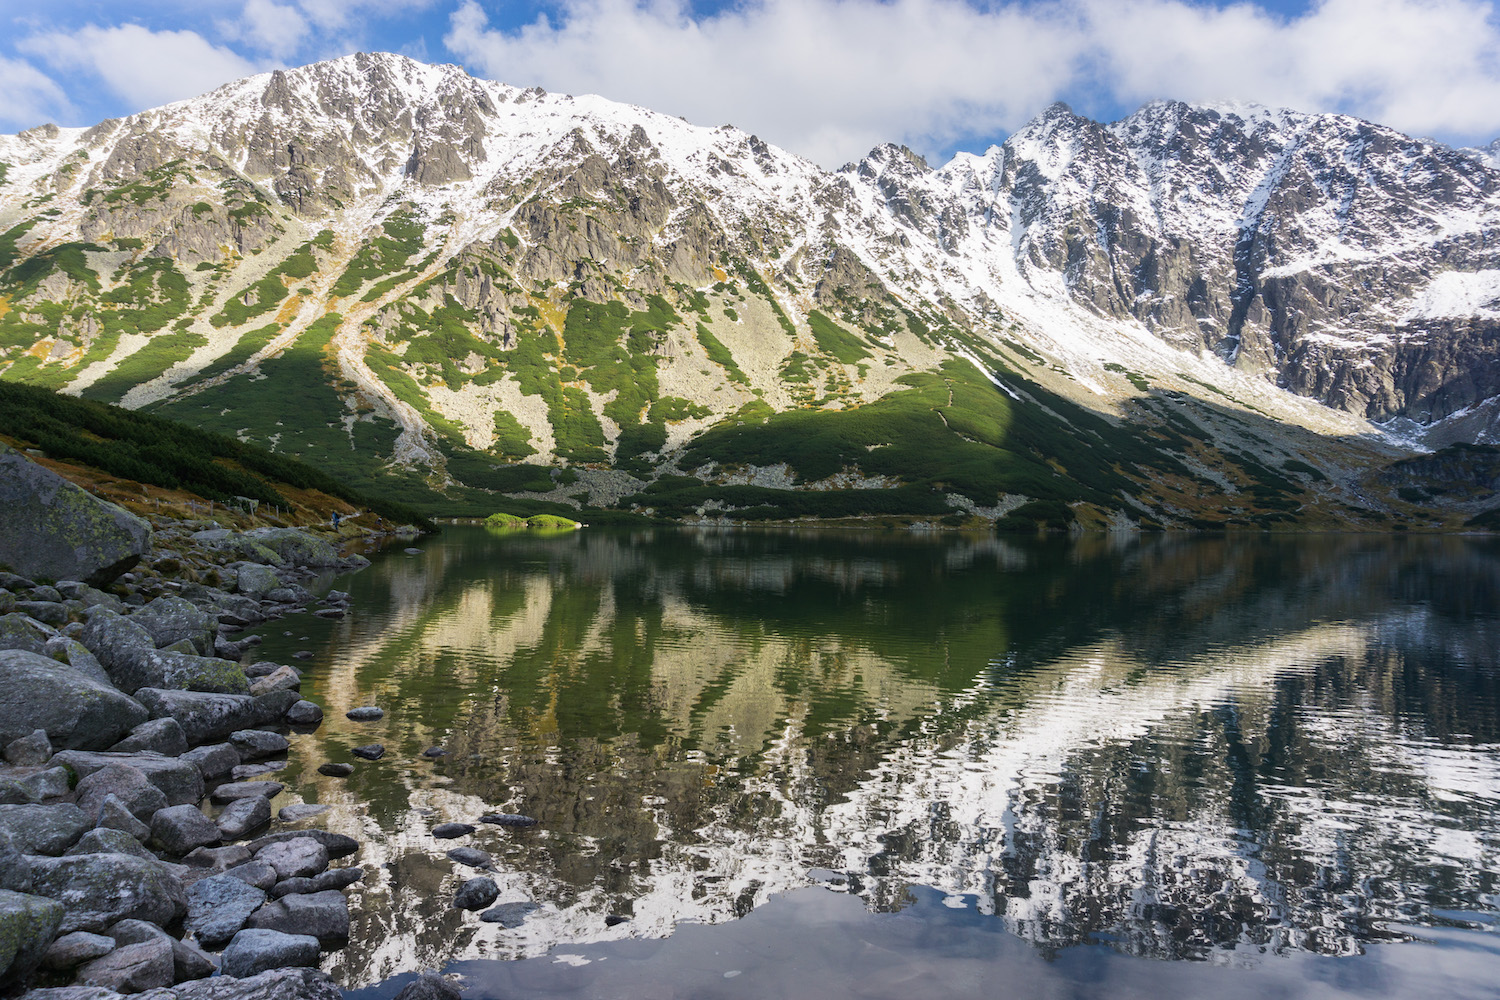 Tatra mountains. Image: Barnyz under a CC license